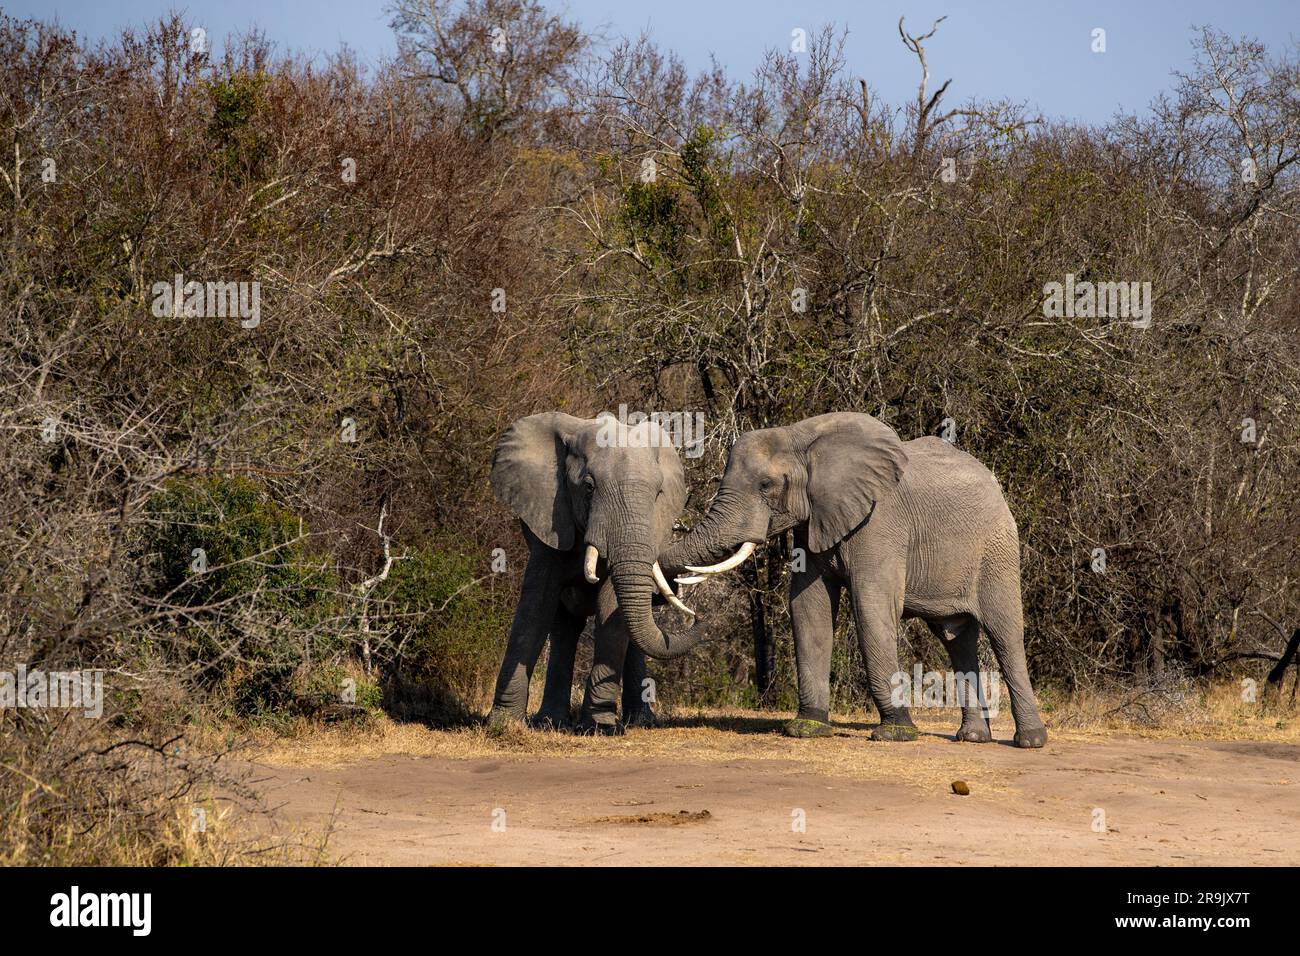 Two elephants, Loxodonta africana, greet each other. Stock Photo